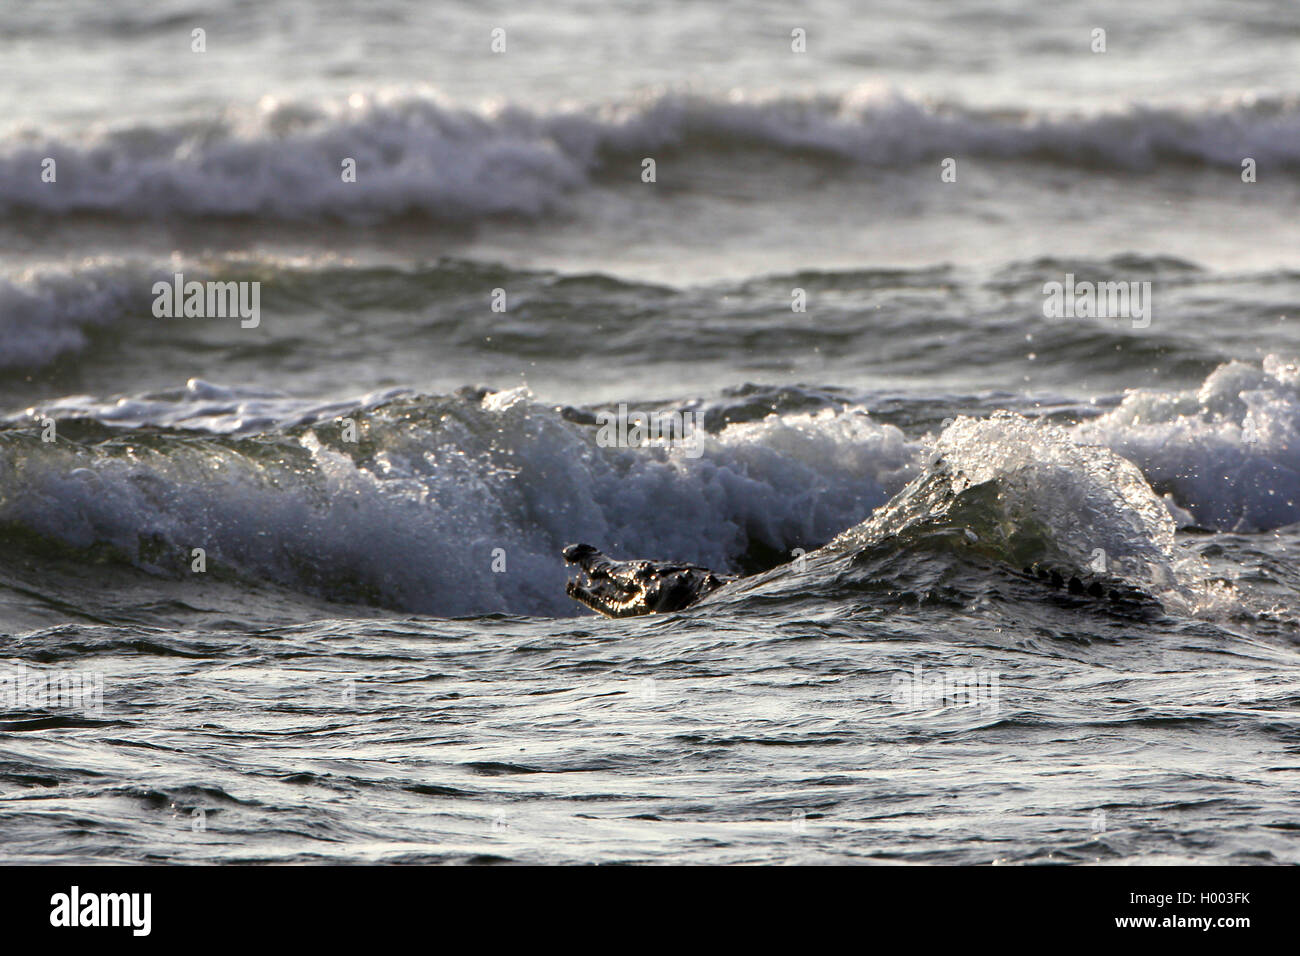 American crocodile (Crocodylus acutus), swimming in the sea, Costa Rica Stock Photo